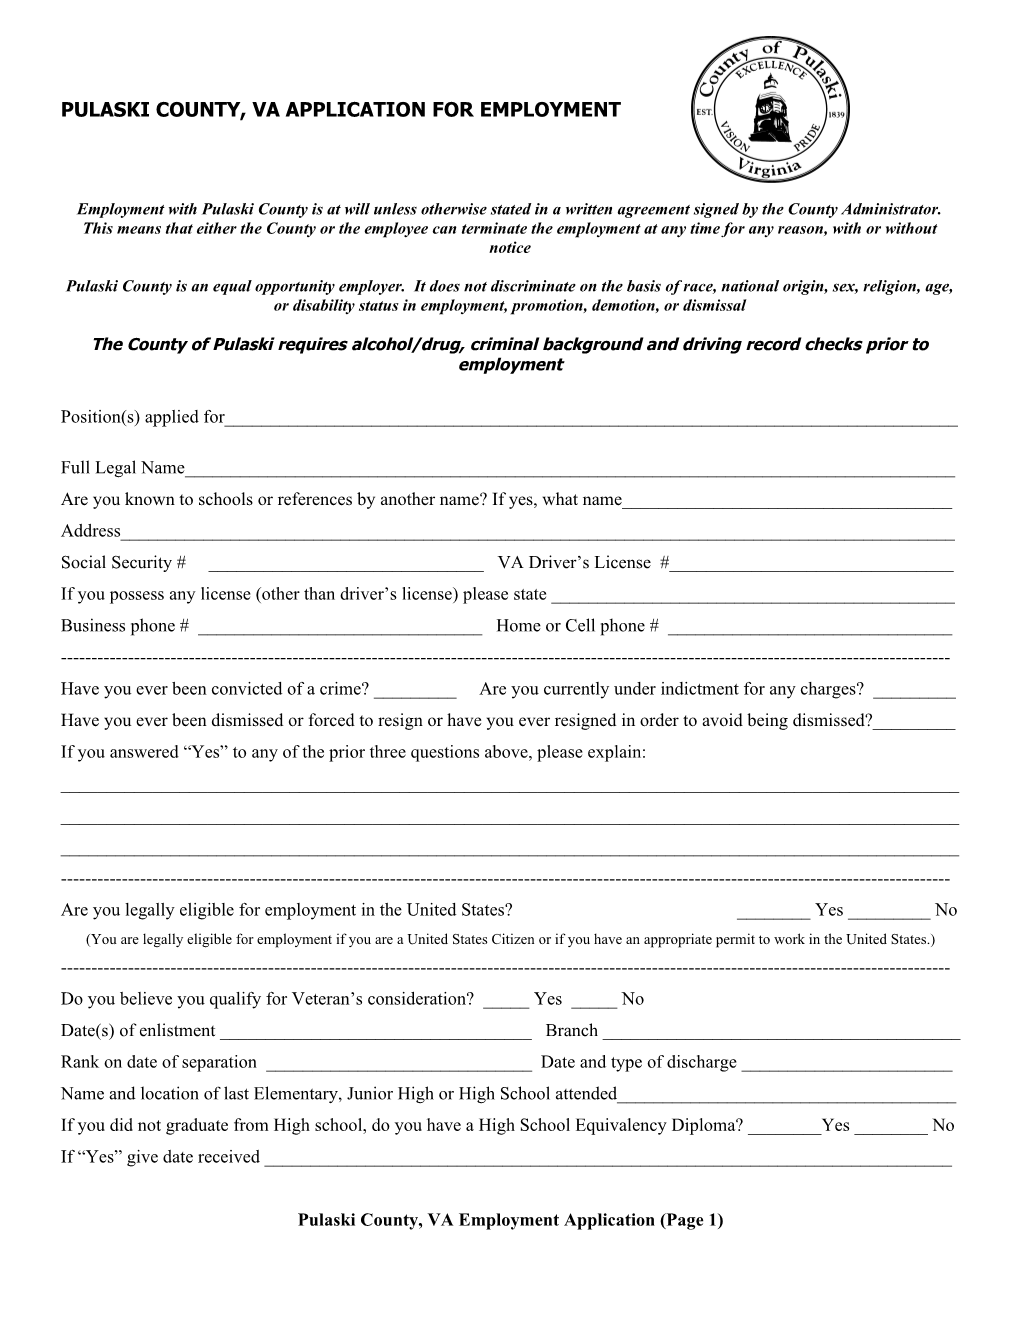 Pulaski County Application for Employment